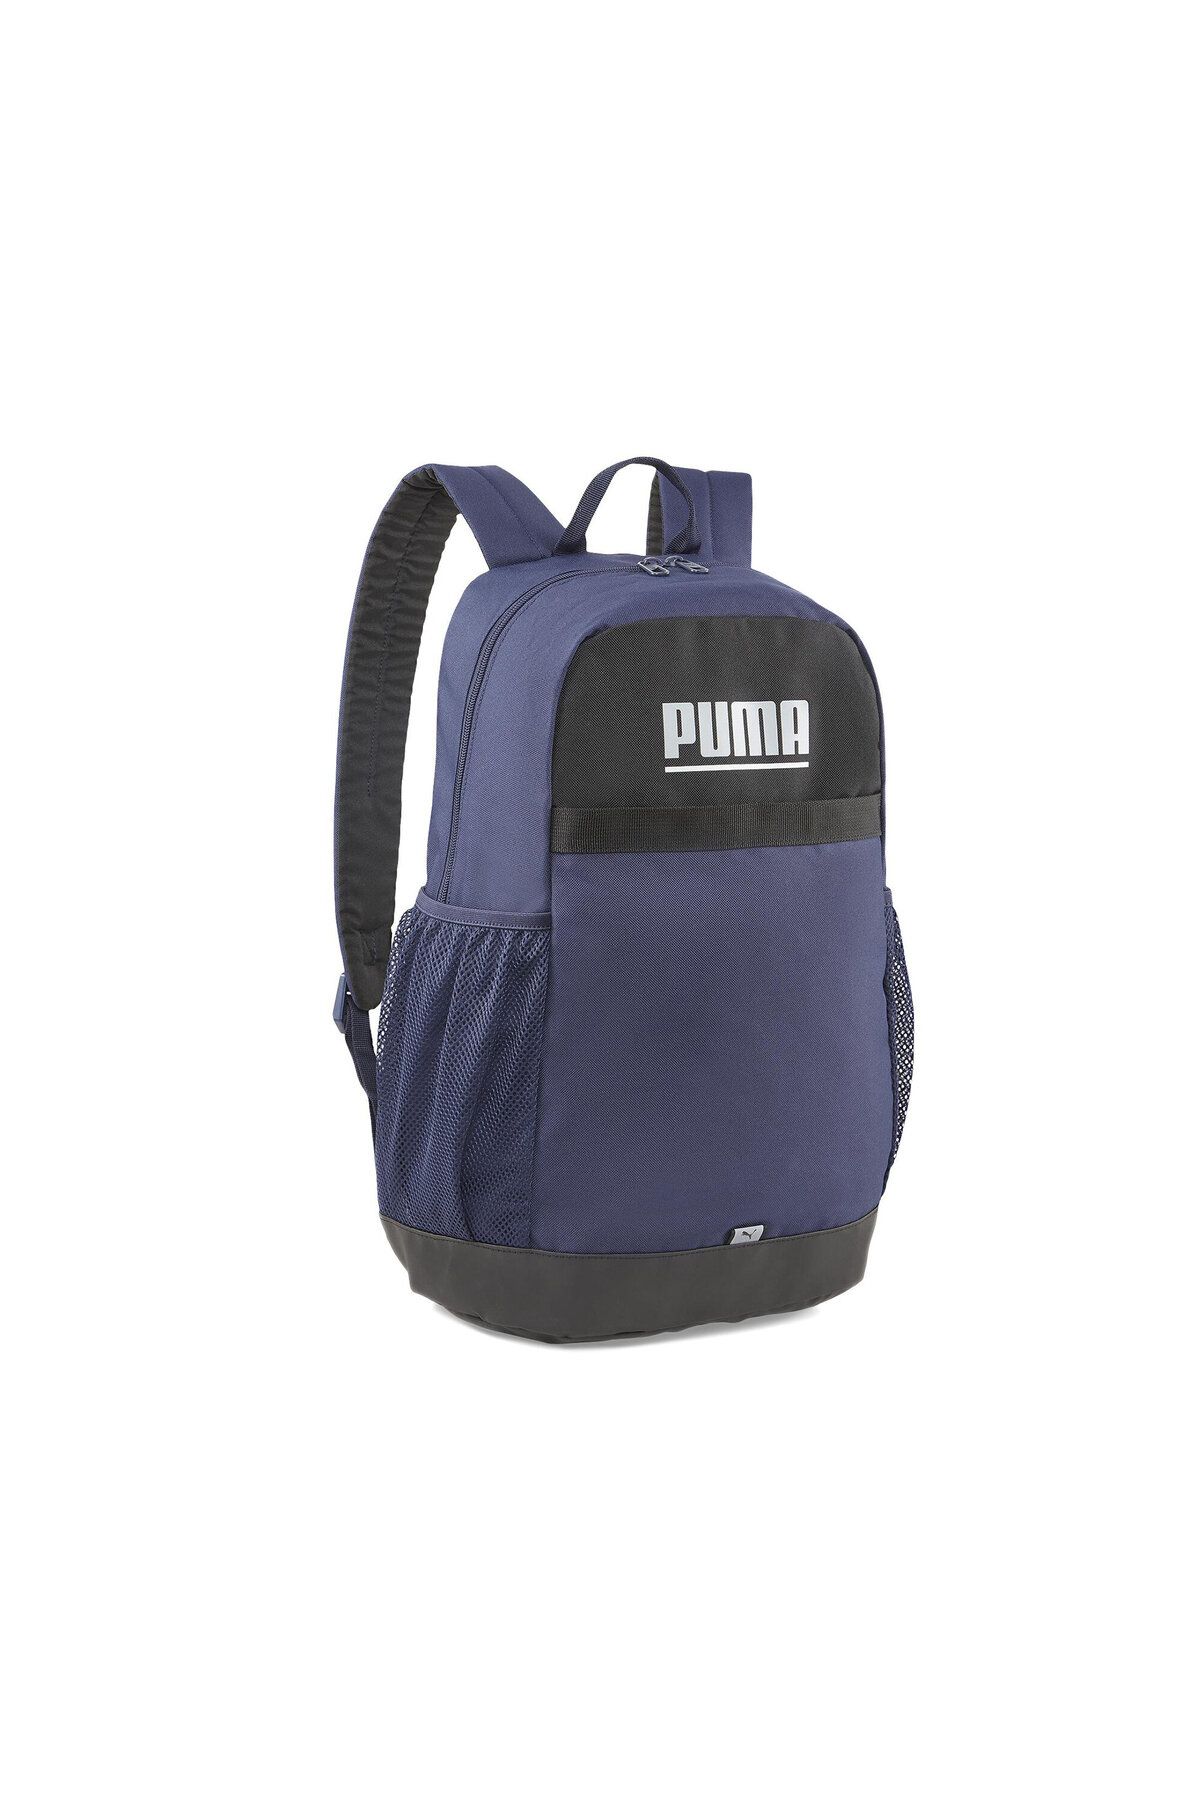 Puma Plus Backpack Sırt Çantası 7961505 Lacivert